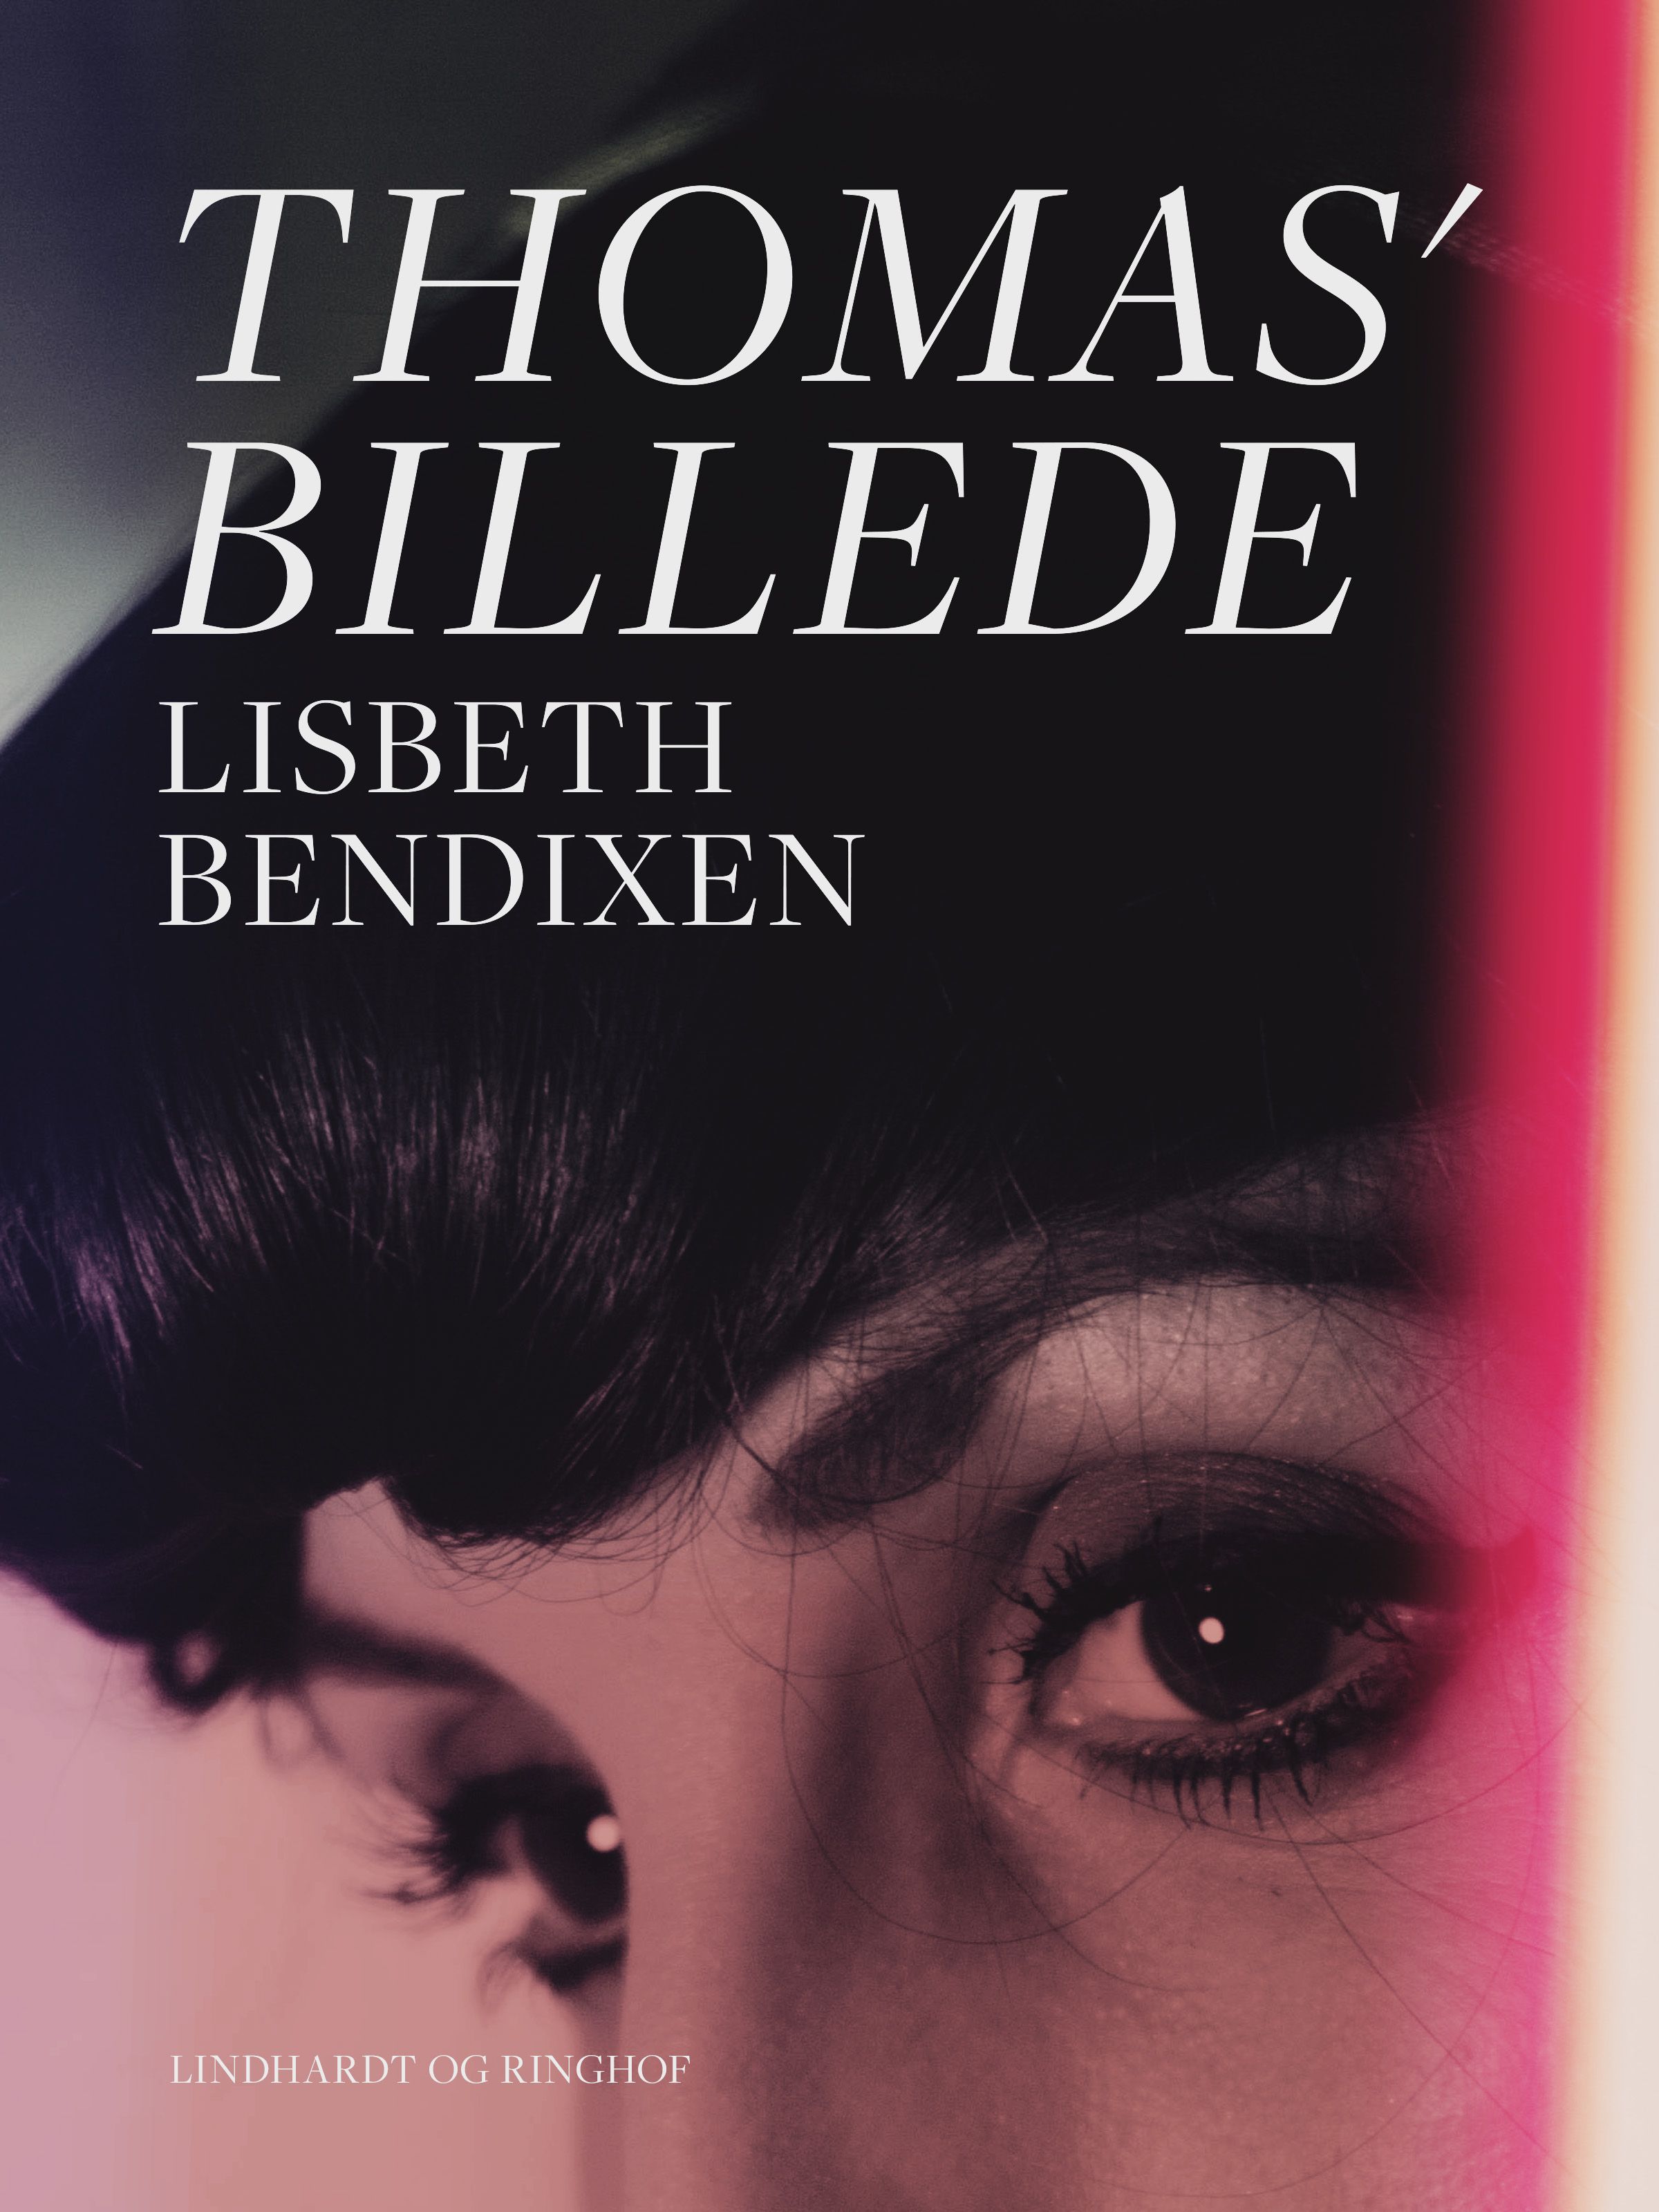 Thomas' billede, eBook by Lisbeth Bendixen